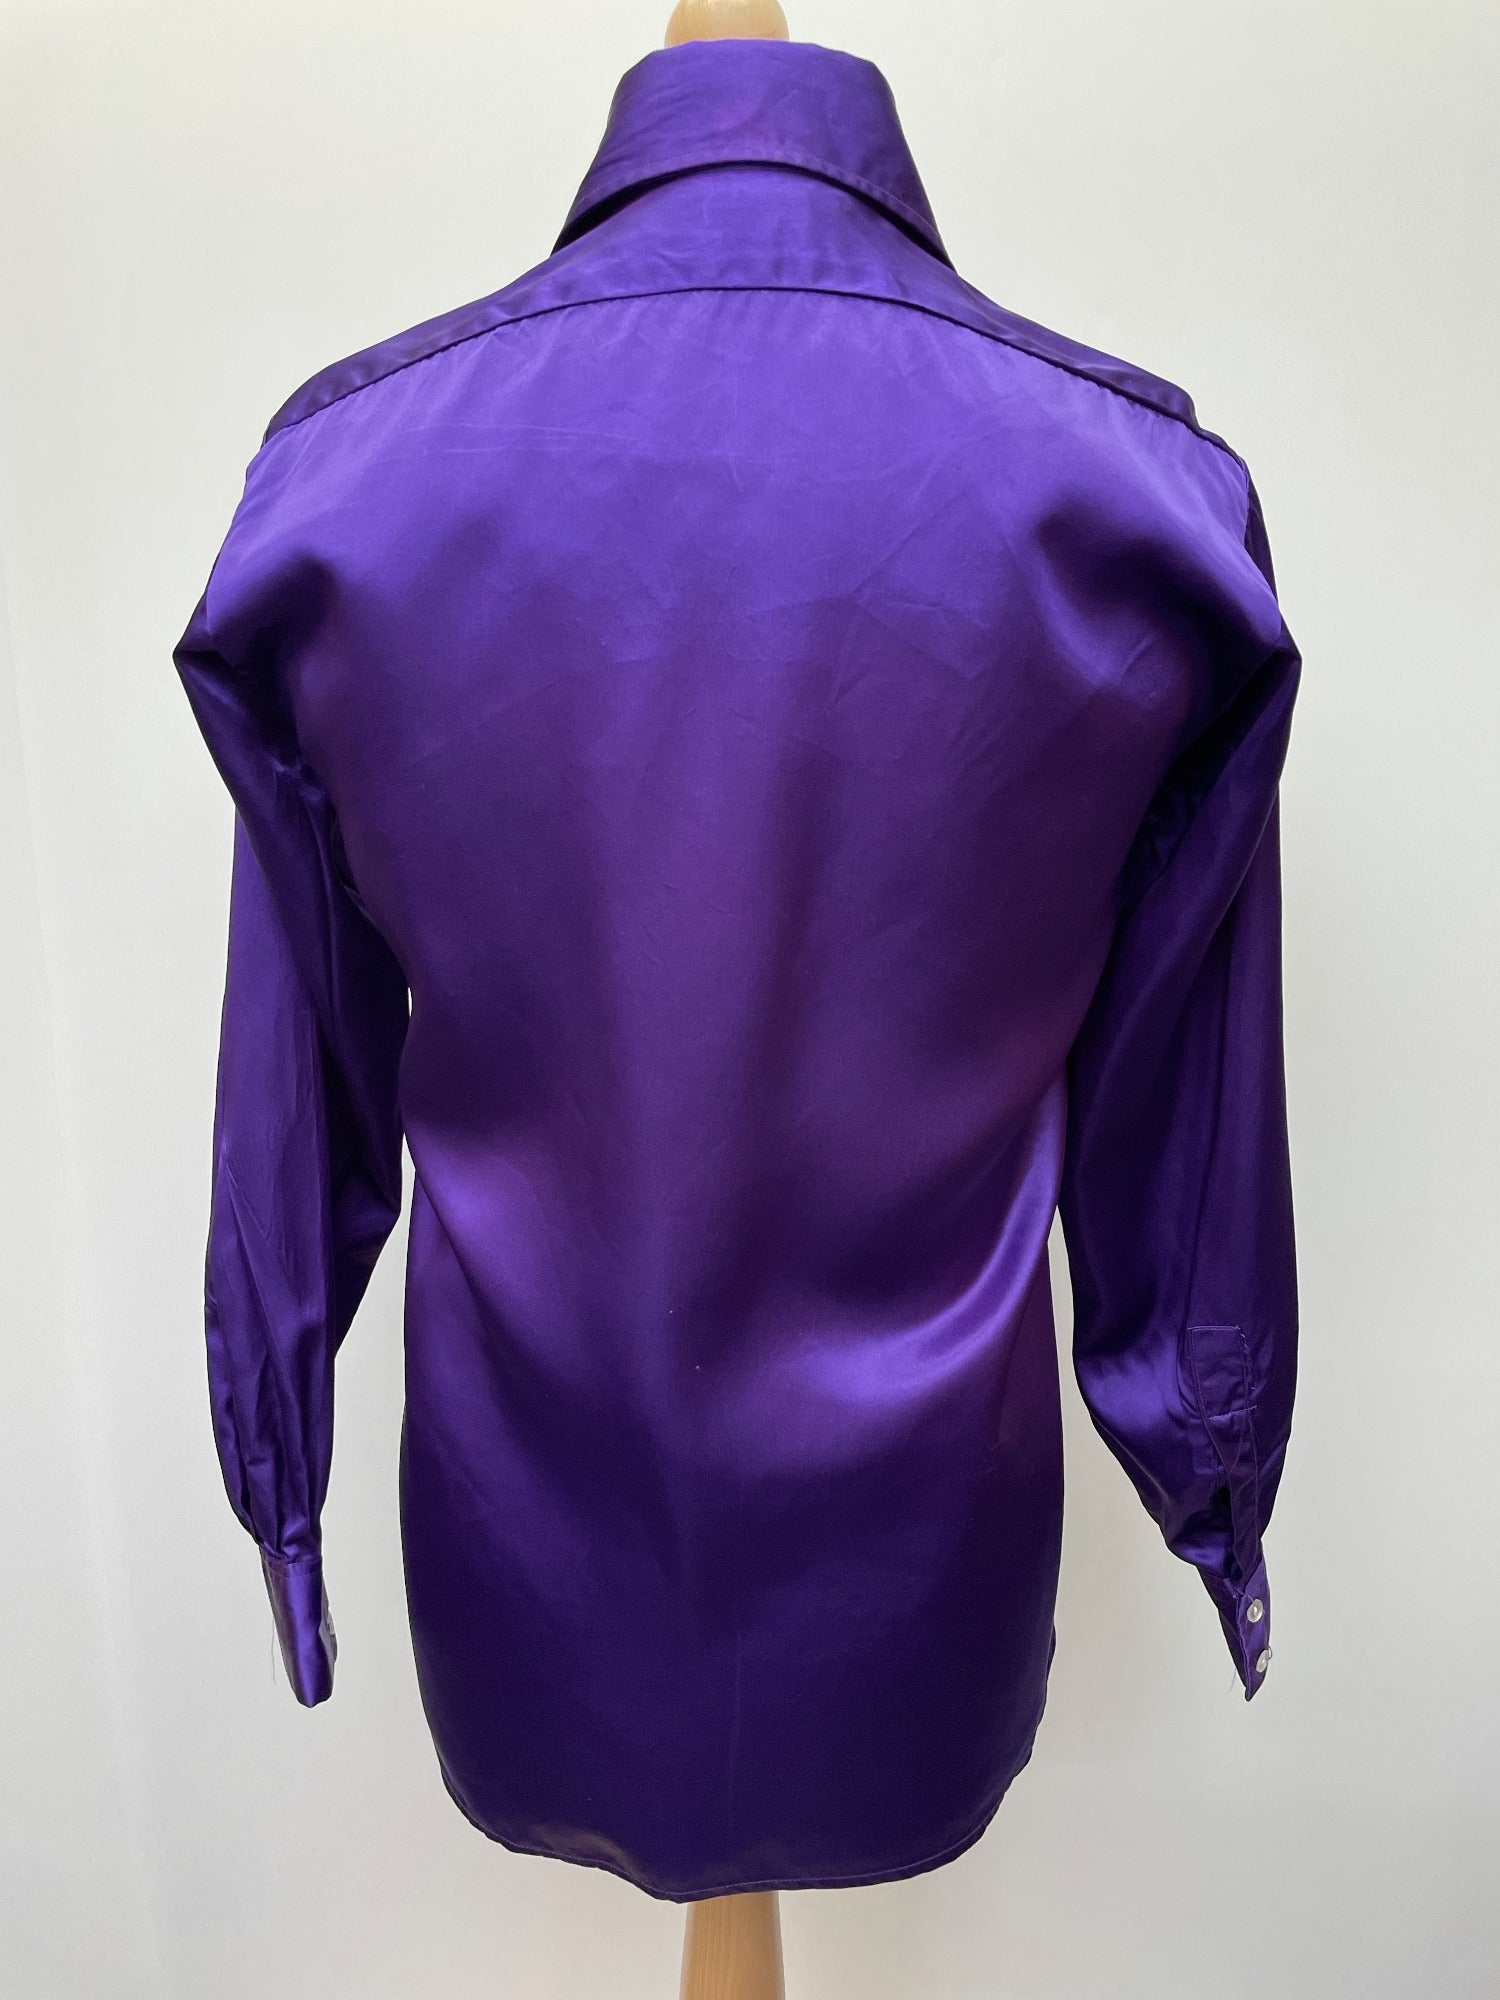 vintage  Urban Village Vintage  urban village  Shirt  satin  S  purple  Mens Shirts  mens  long sleeve  Irvine Sellars  disco  collar  big collar  Beagle collar  60s  1960s